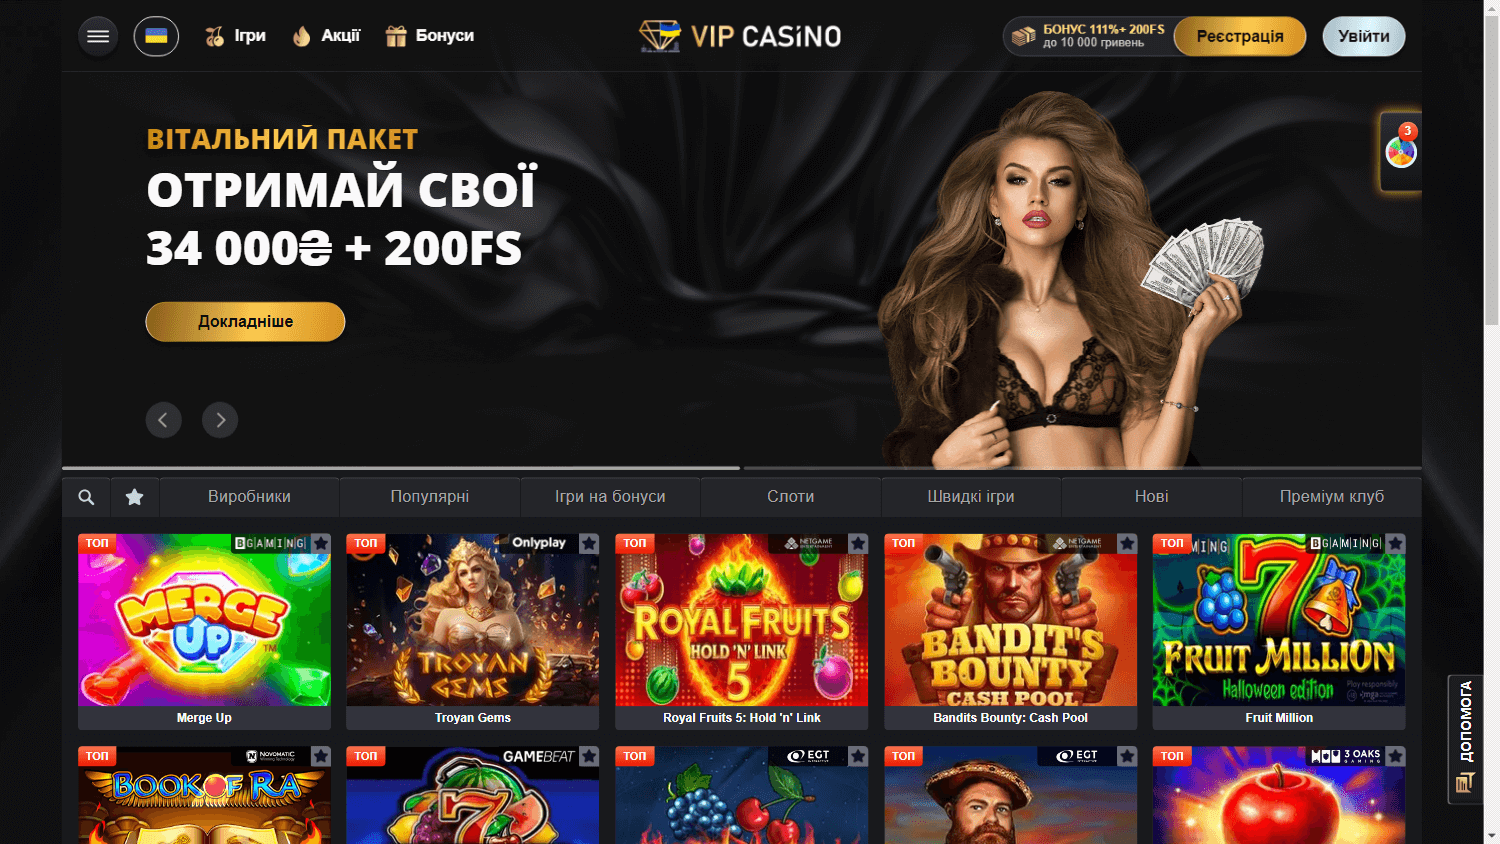 vip_casino_homepage_desktop